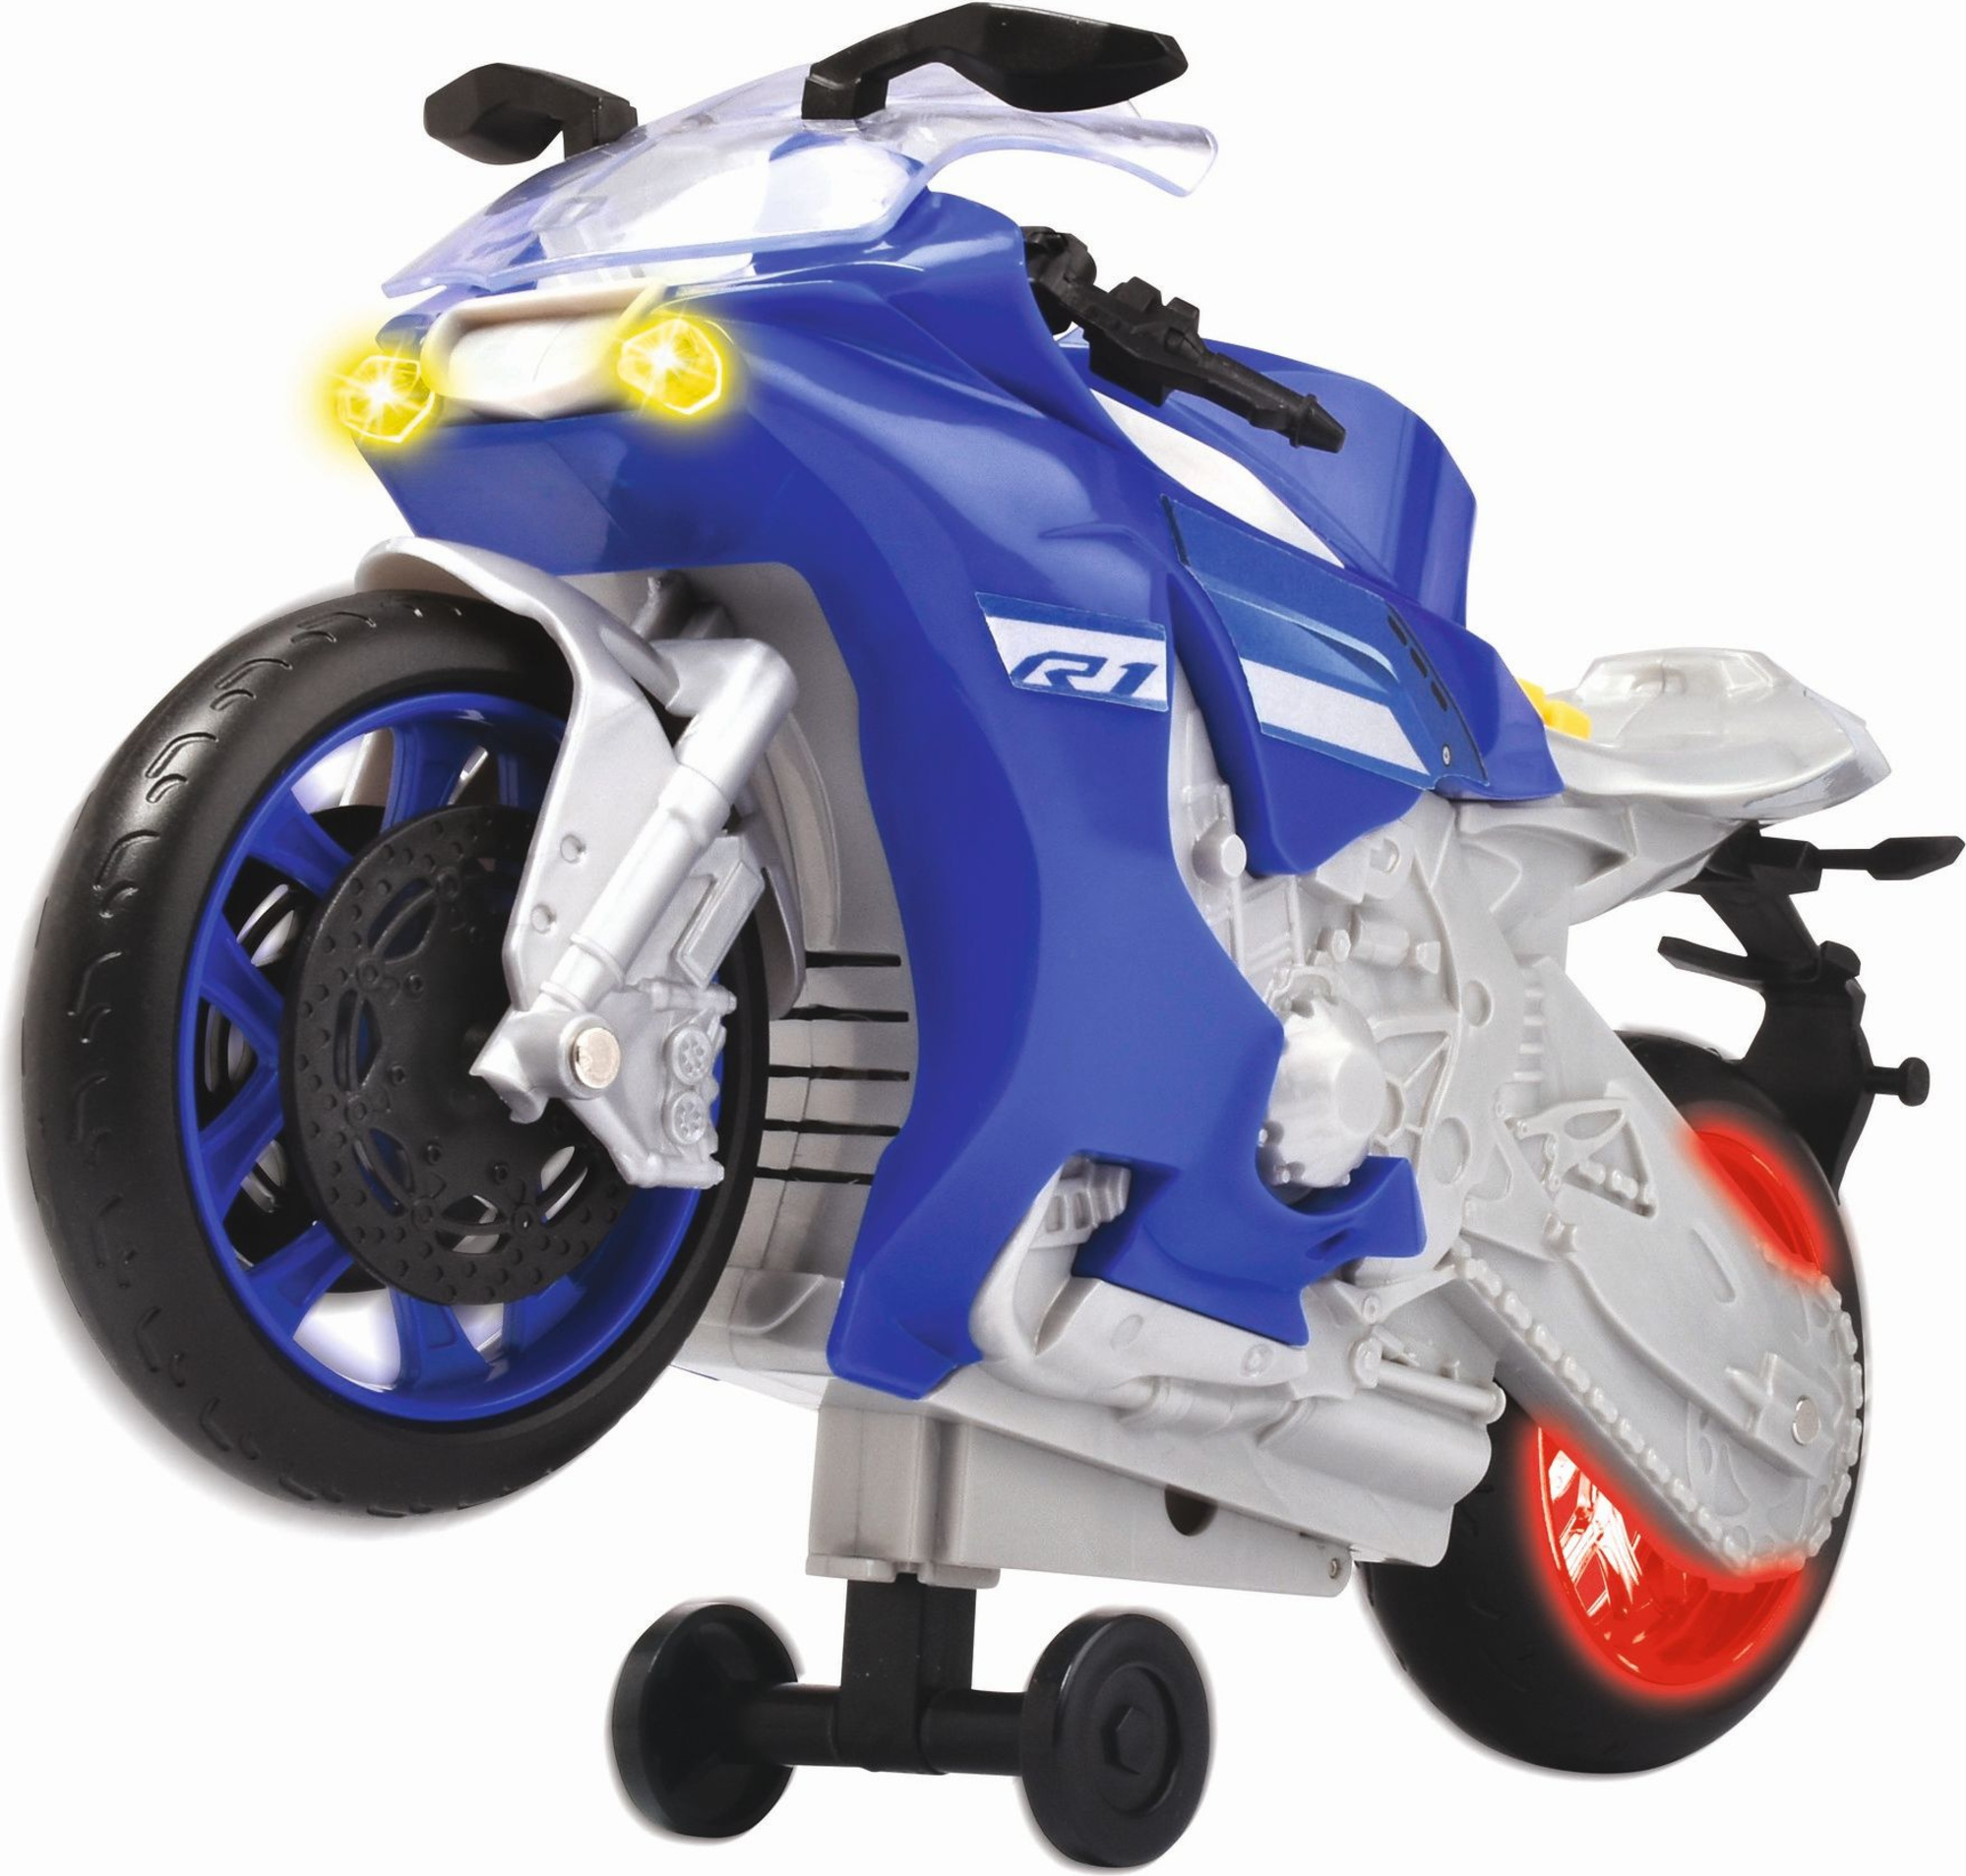 Motocykl Yamaha R1 Wheelie Raiders 26 cm